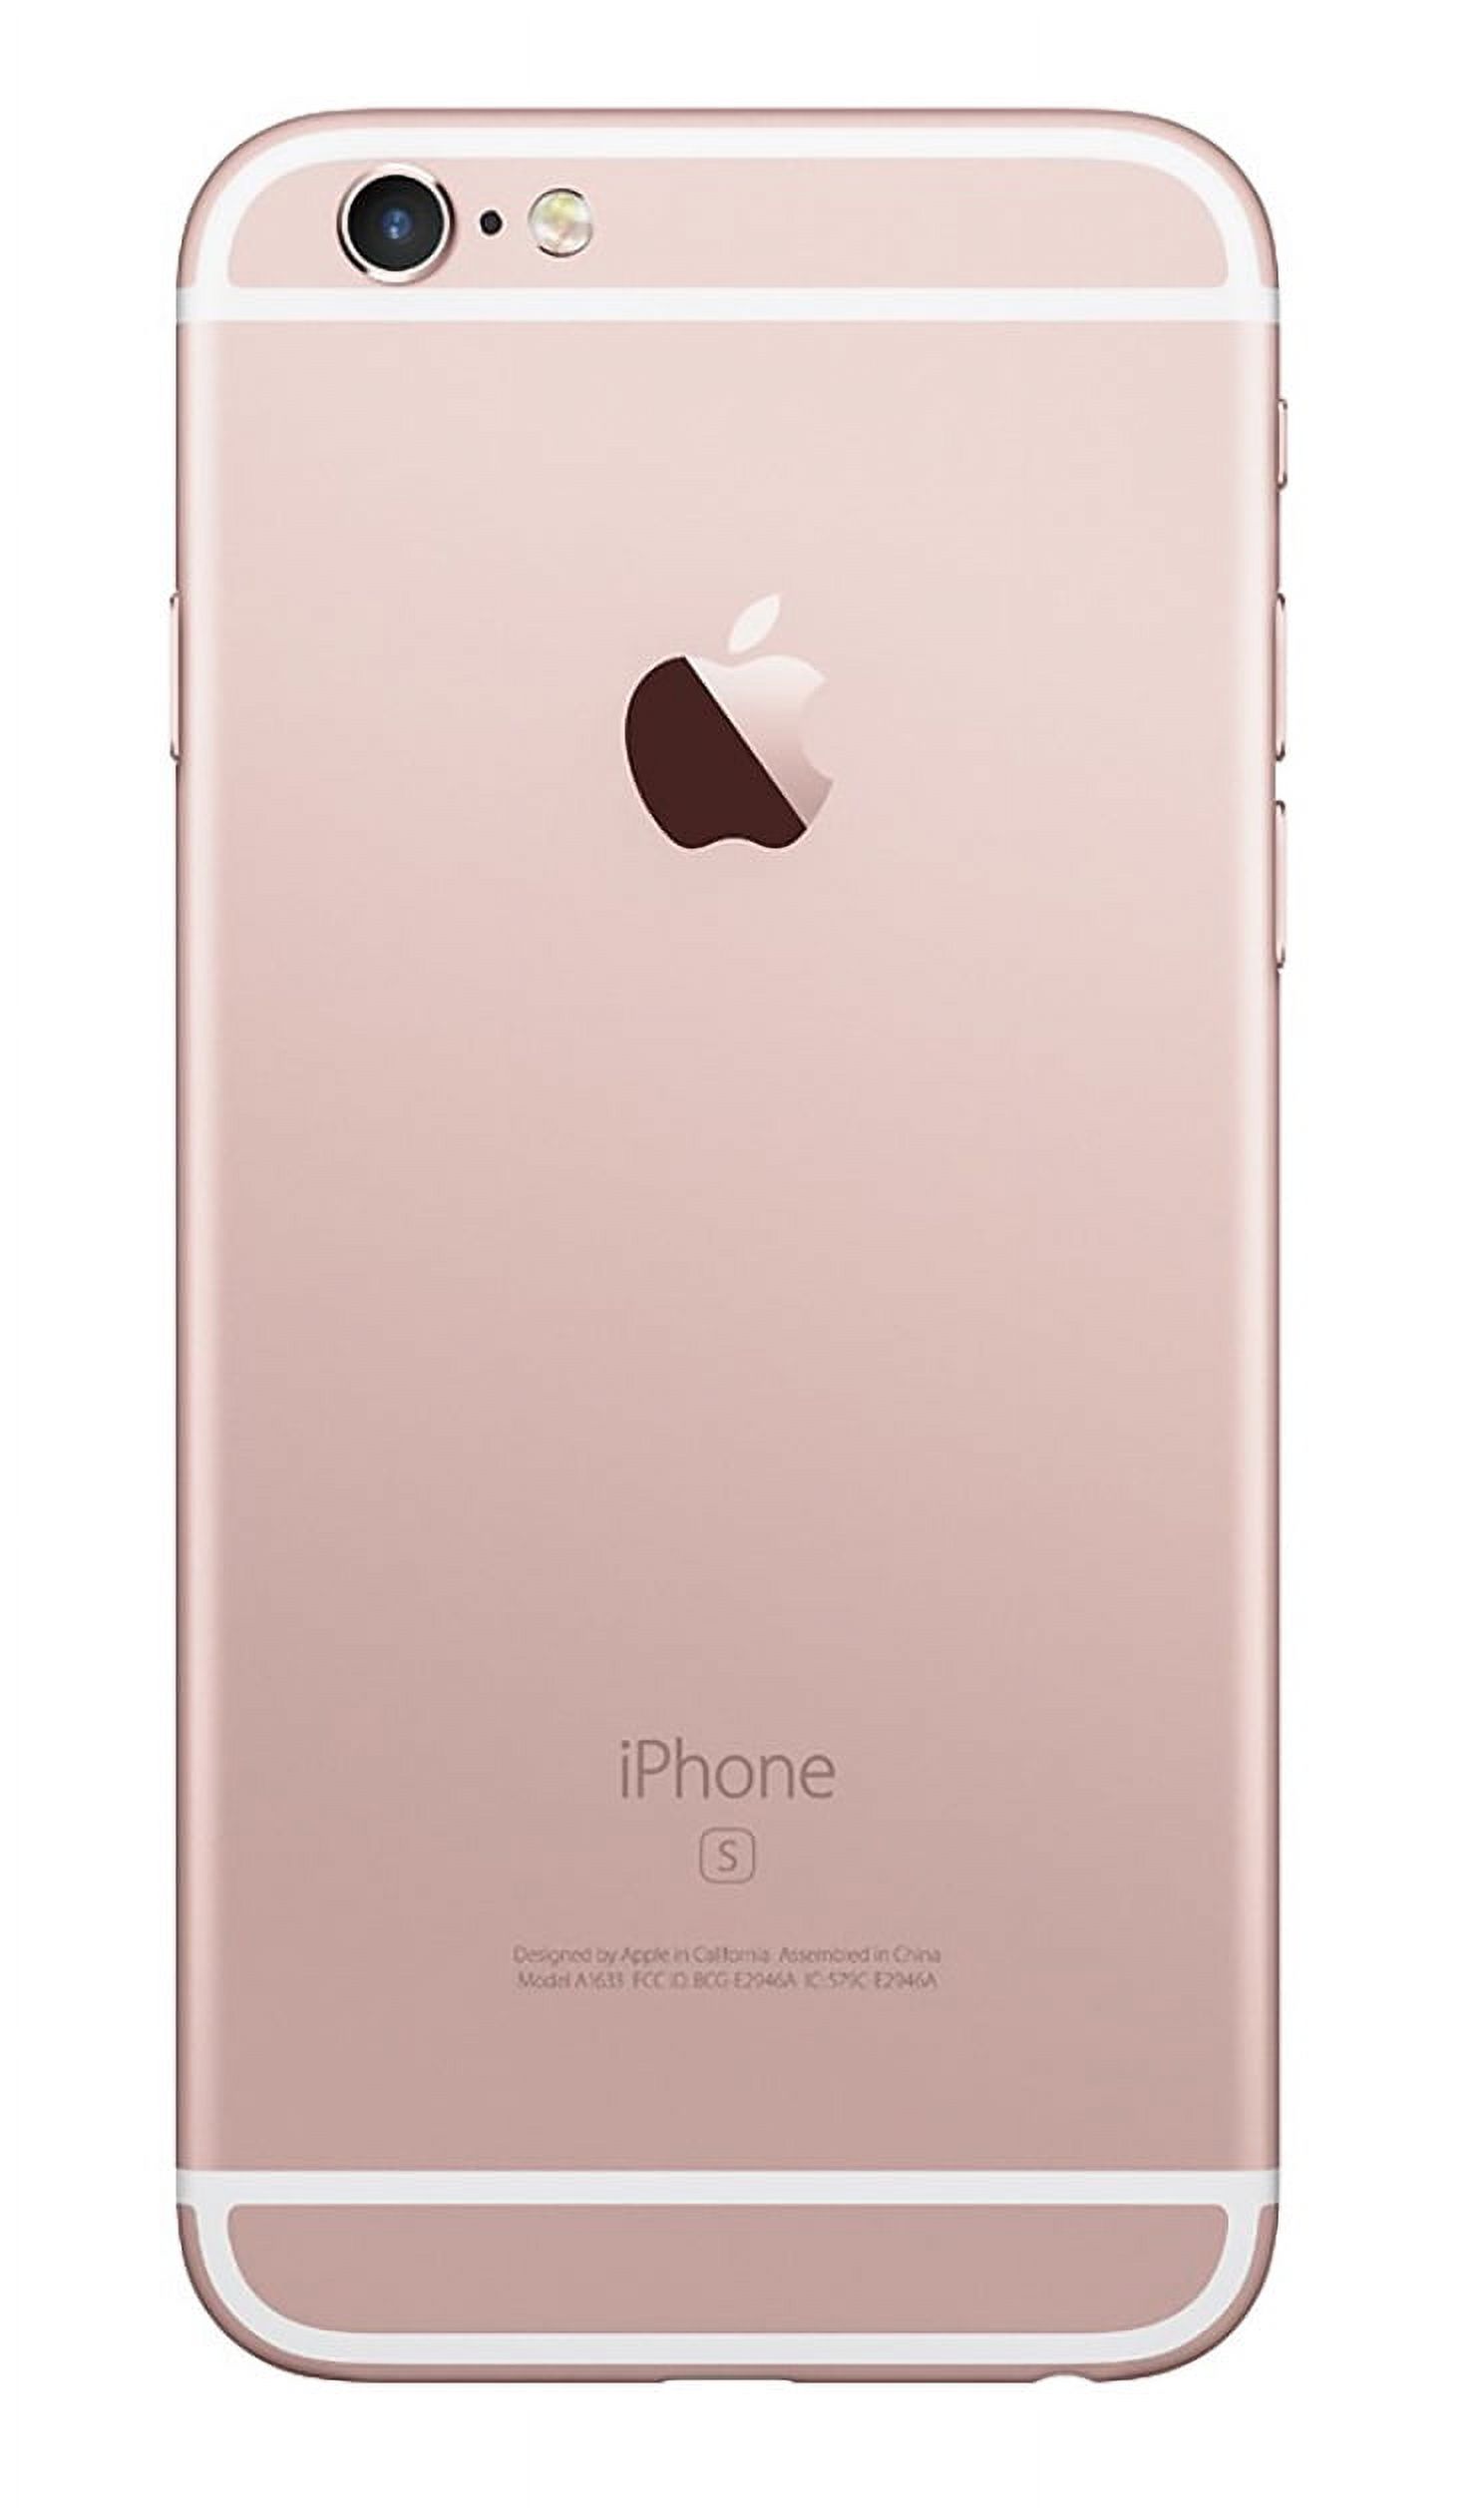 Restored Apple iPhone 6s 16GB, Rose Gold - Unlocked GSM (Refurbished) - image 2 of 3